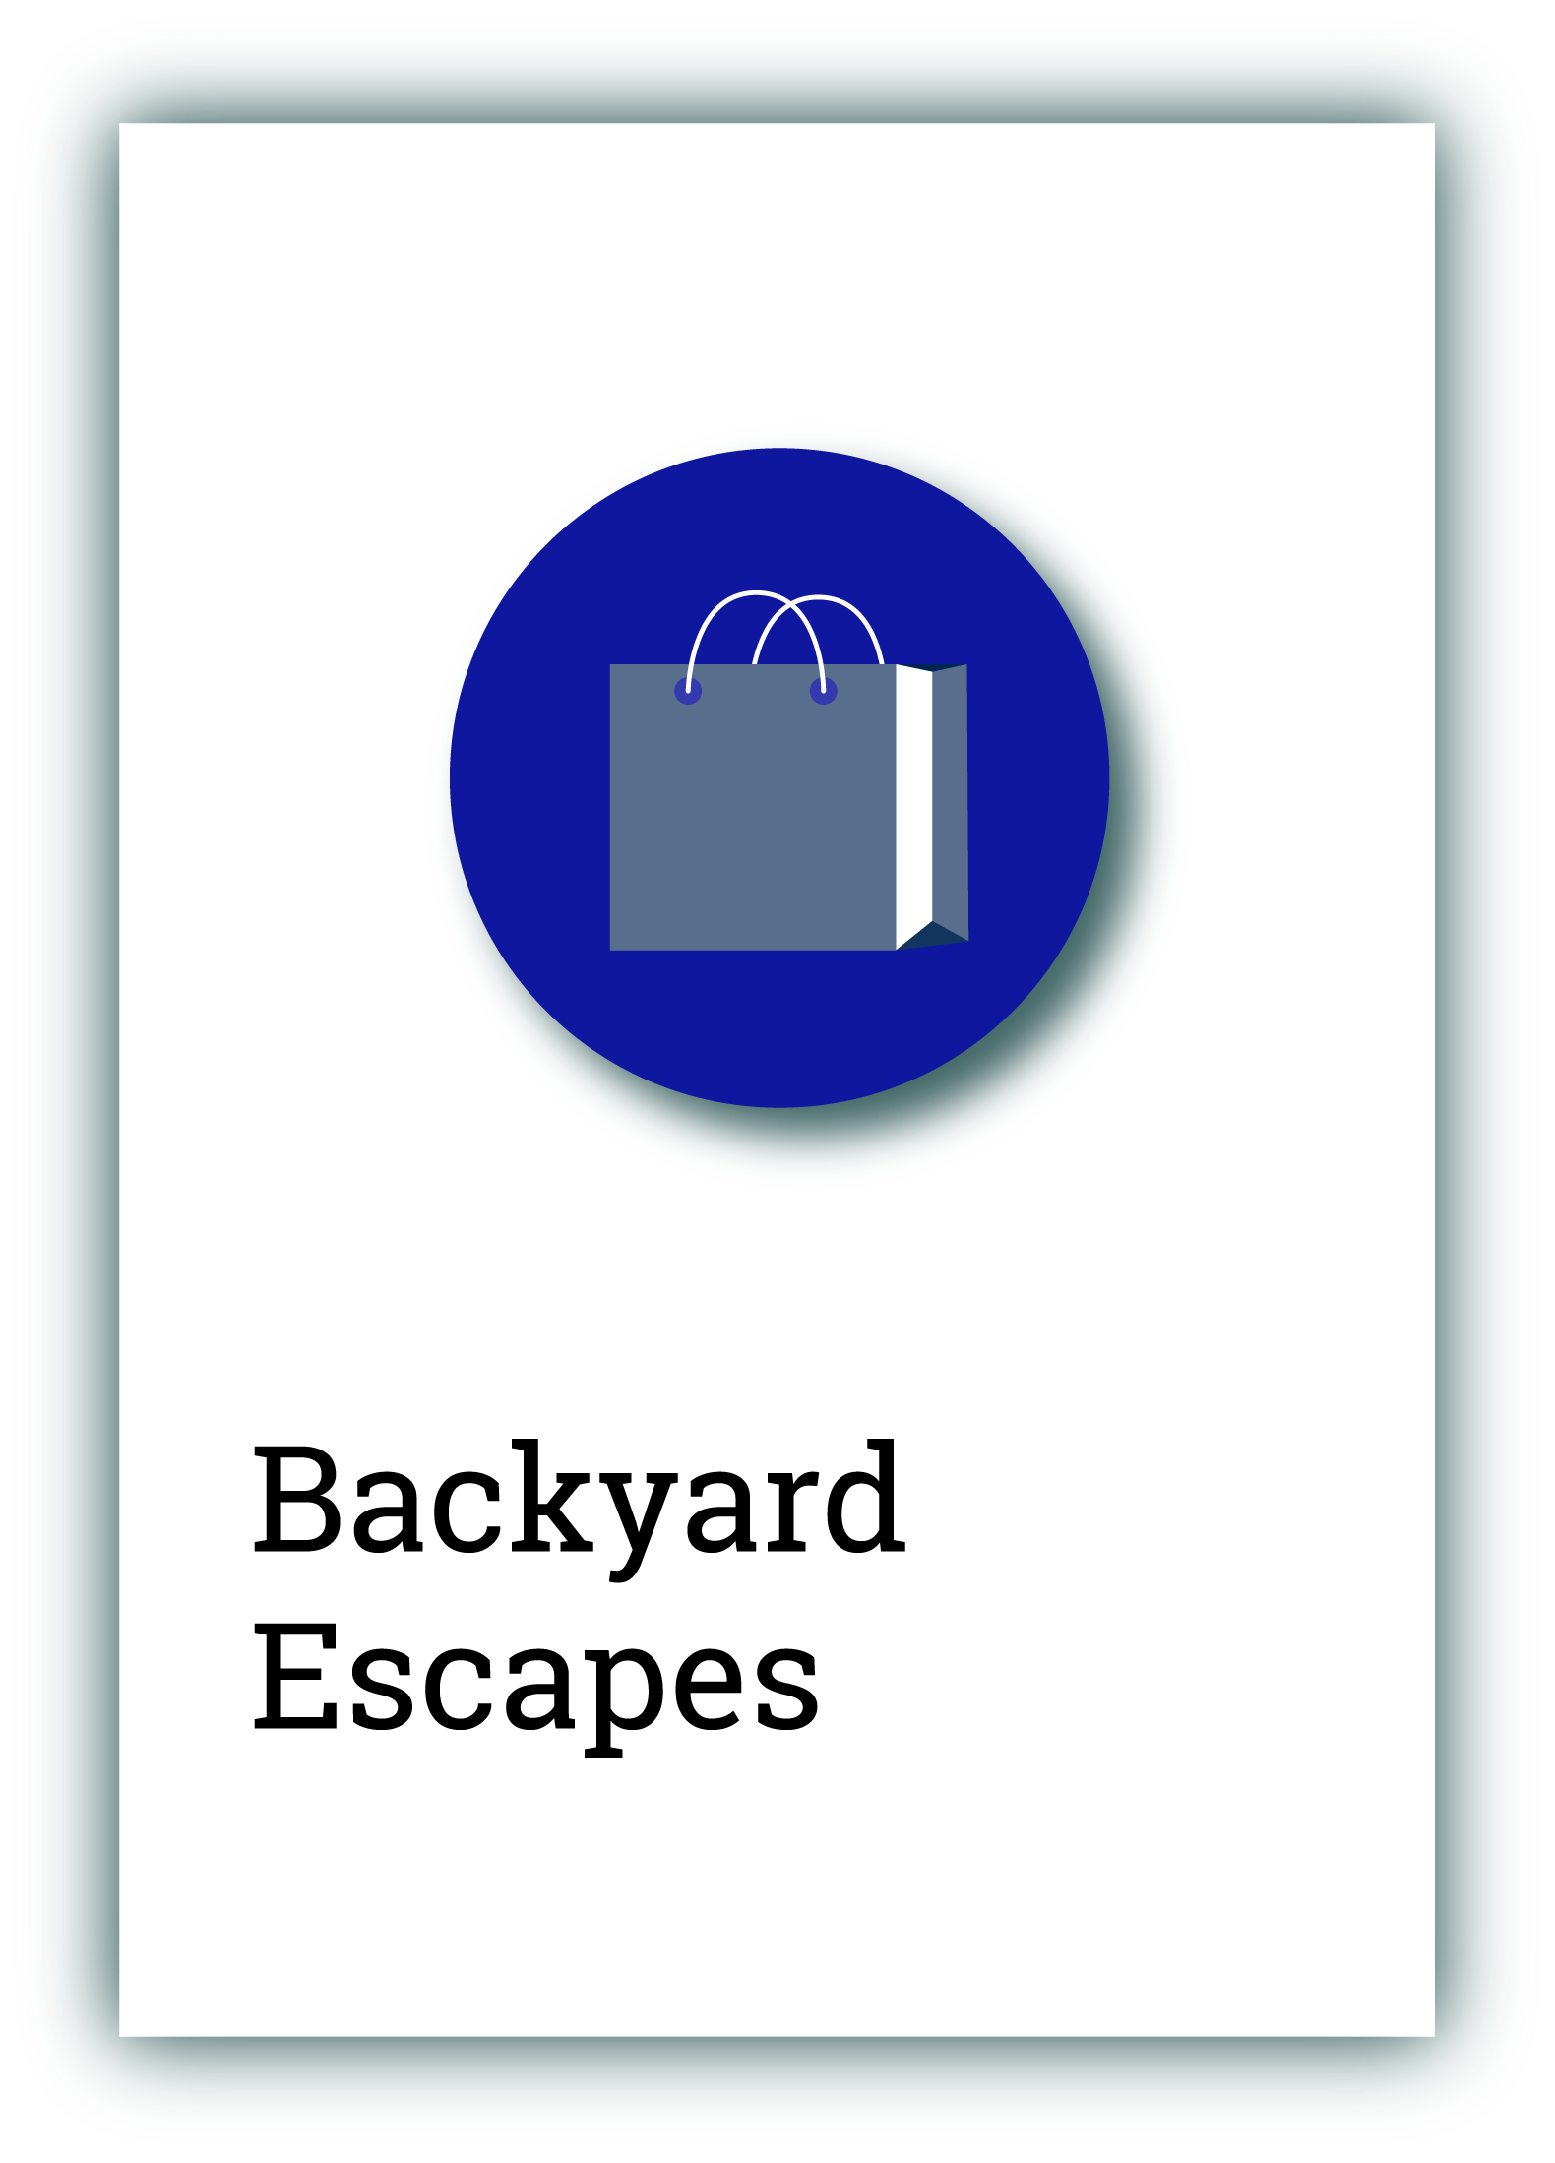 Backyard Escapes